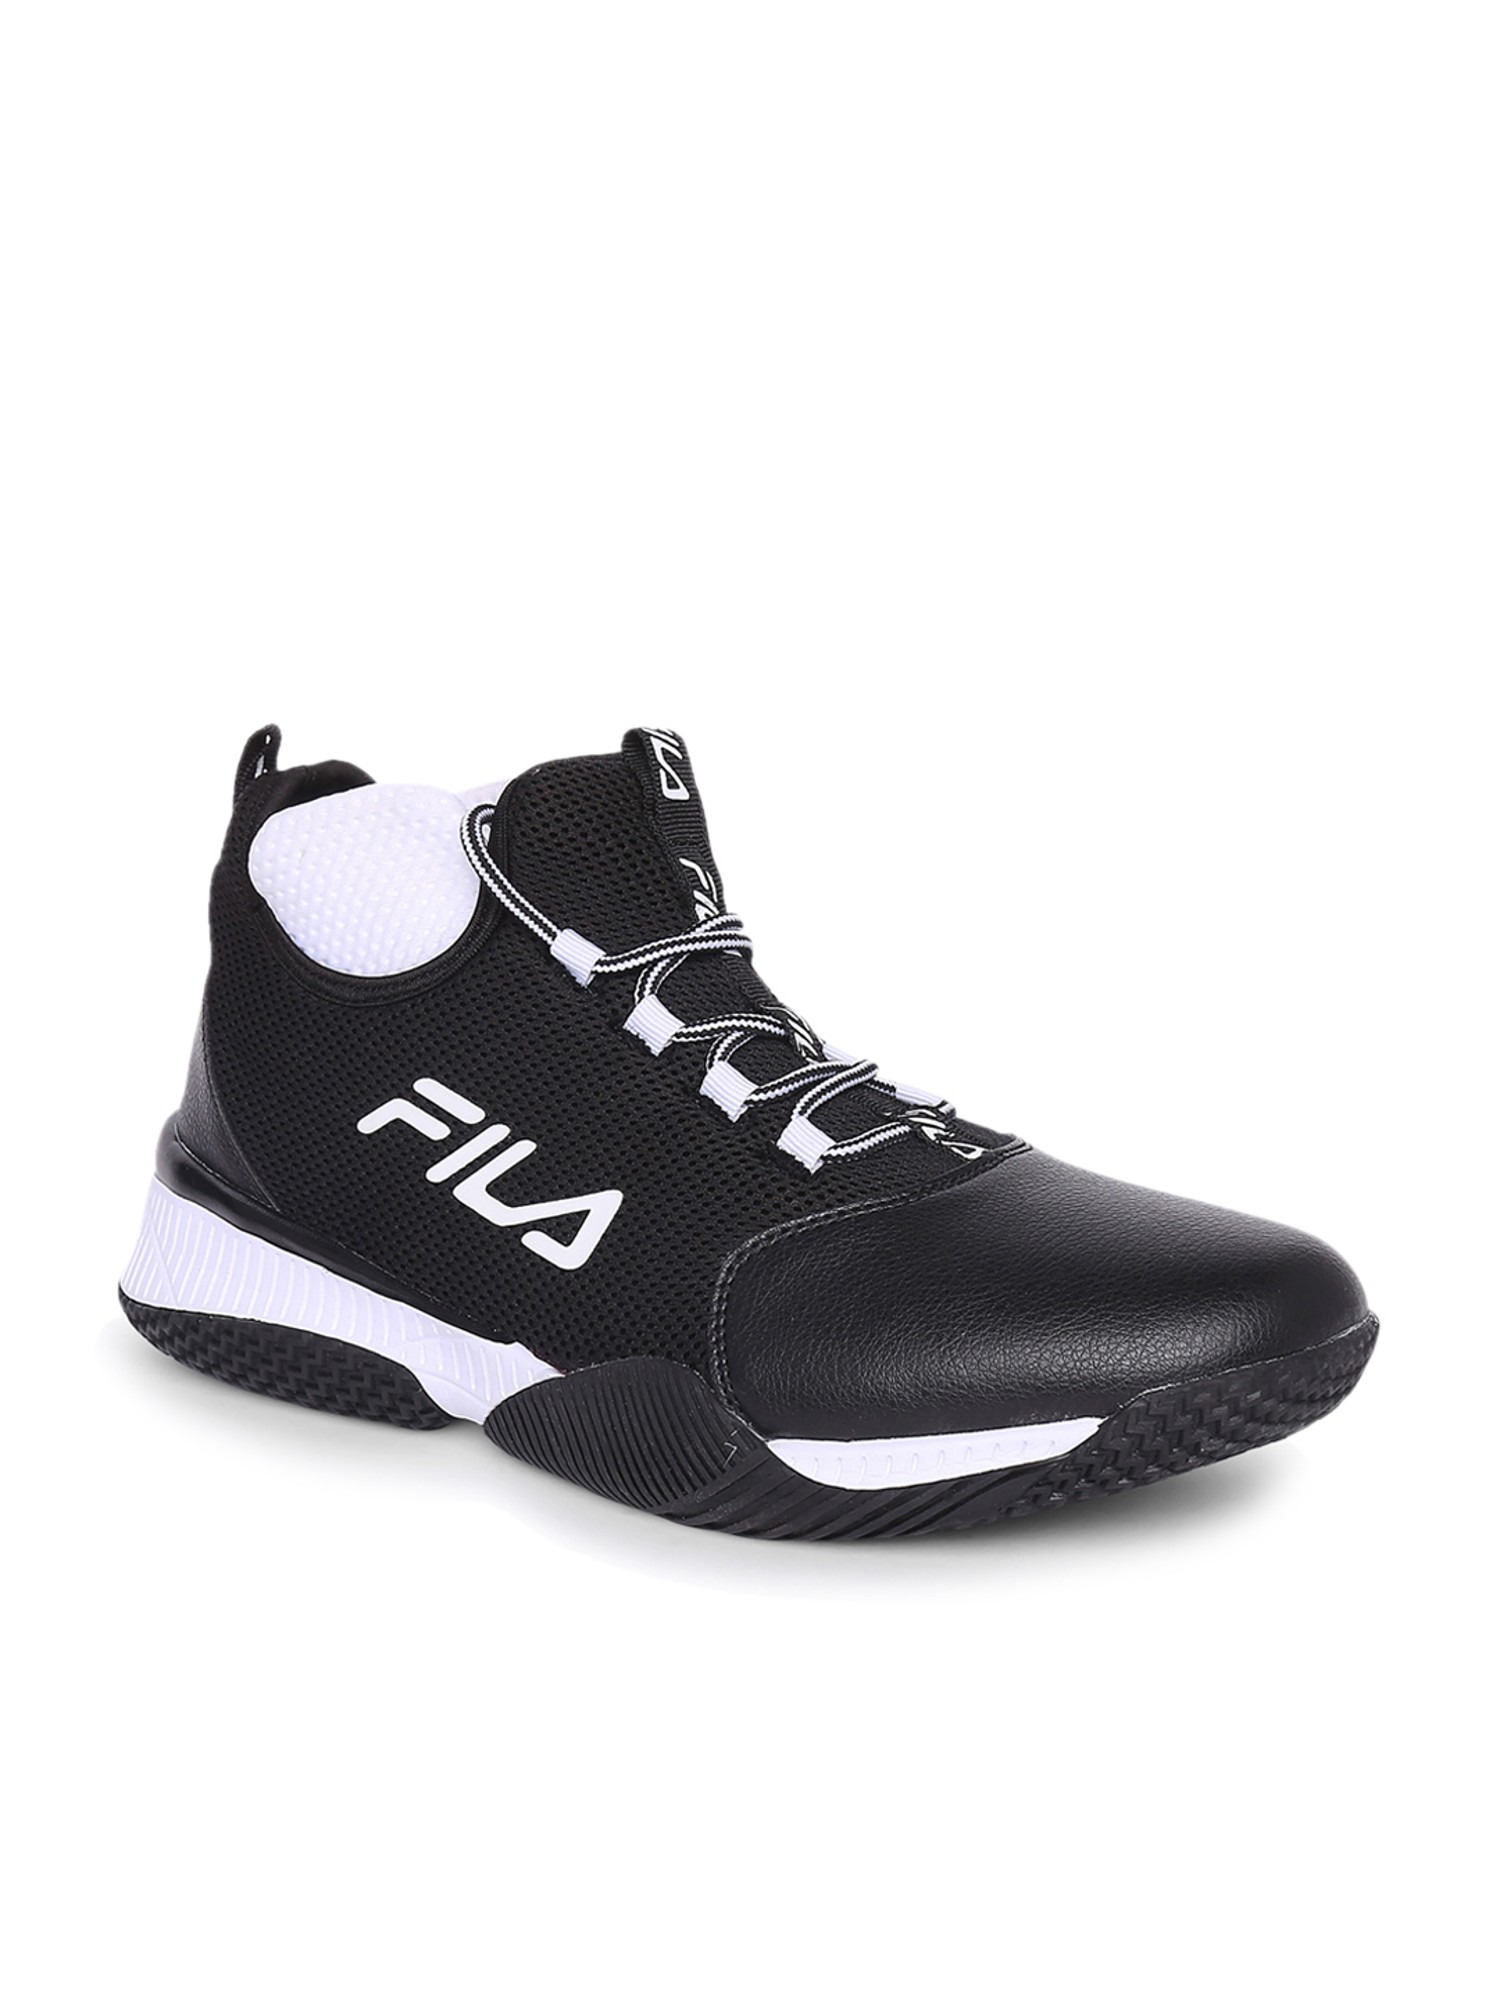 Mr.shoes A71 Imported J.d Fashion Air Jodan Non Marking Sole Basketball  Tennis Badminton Basketball Shoes